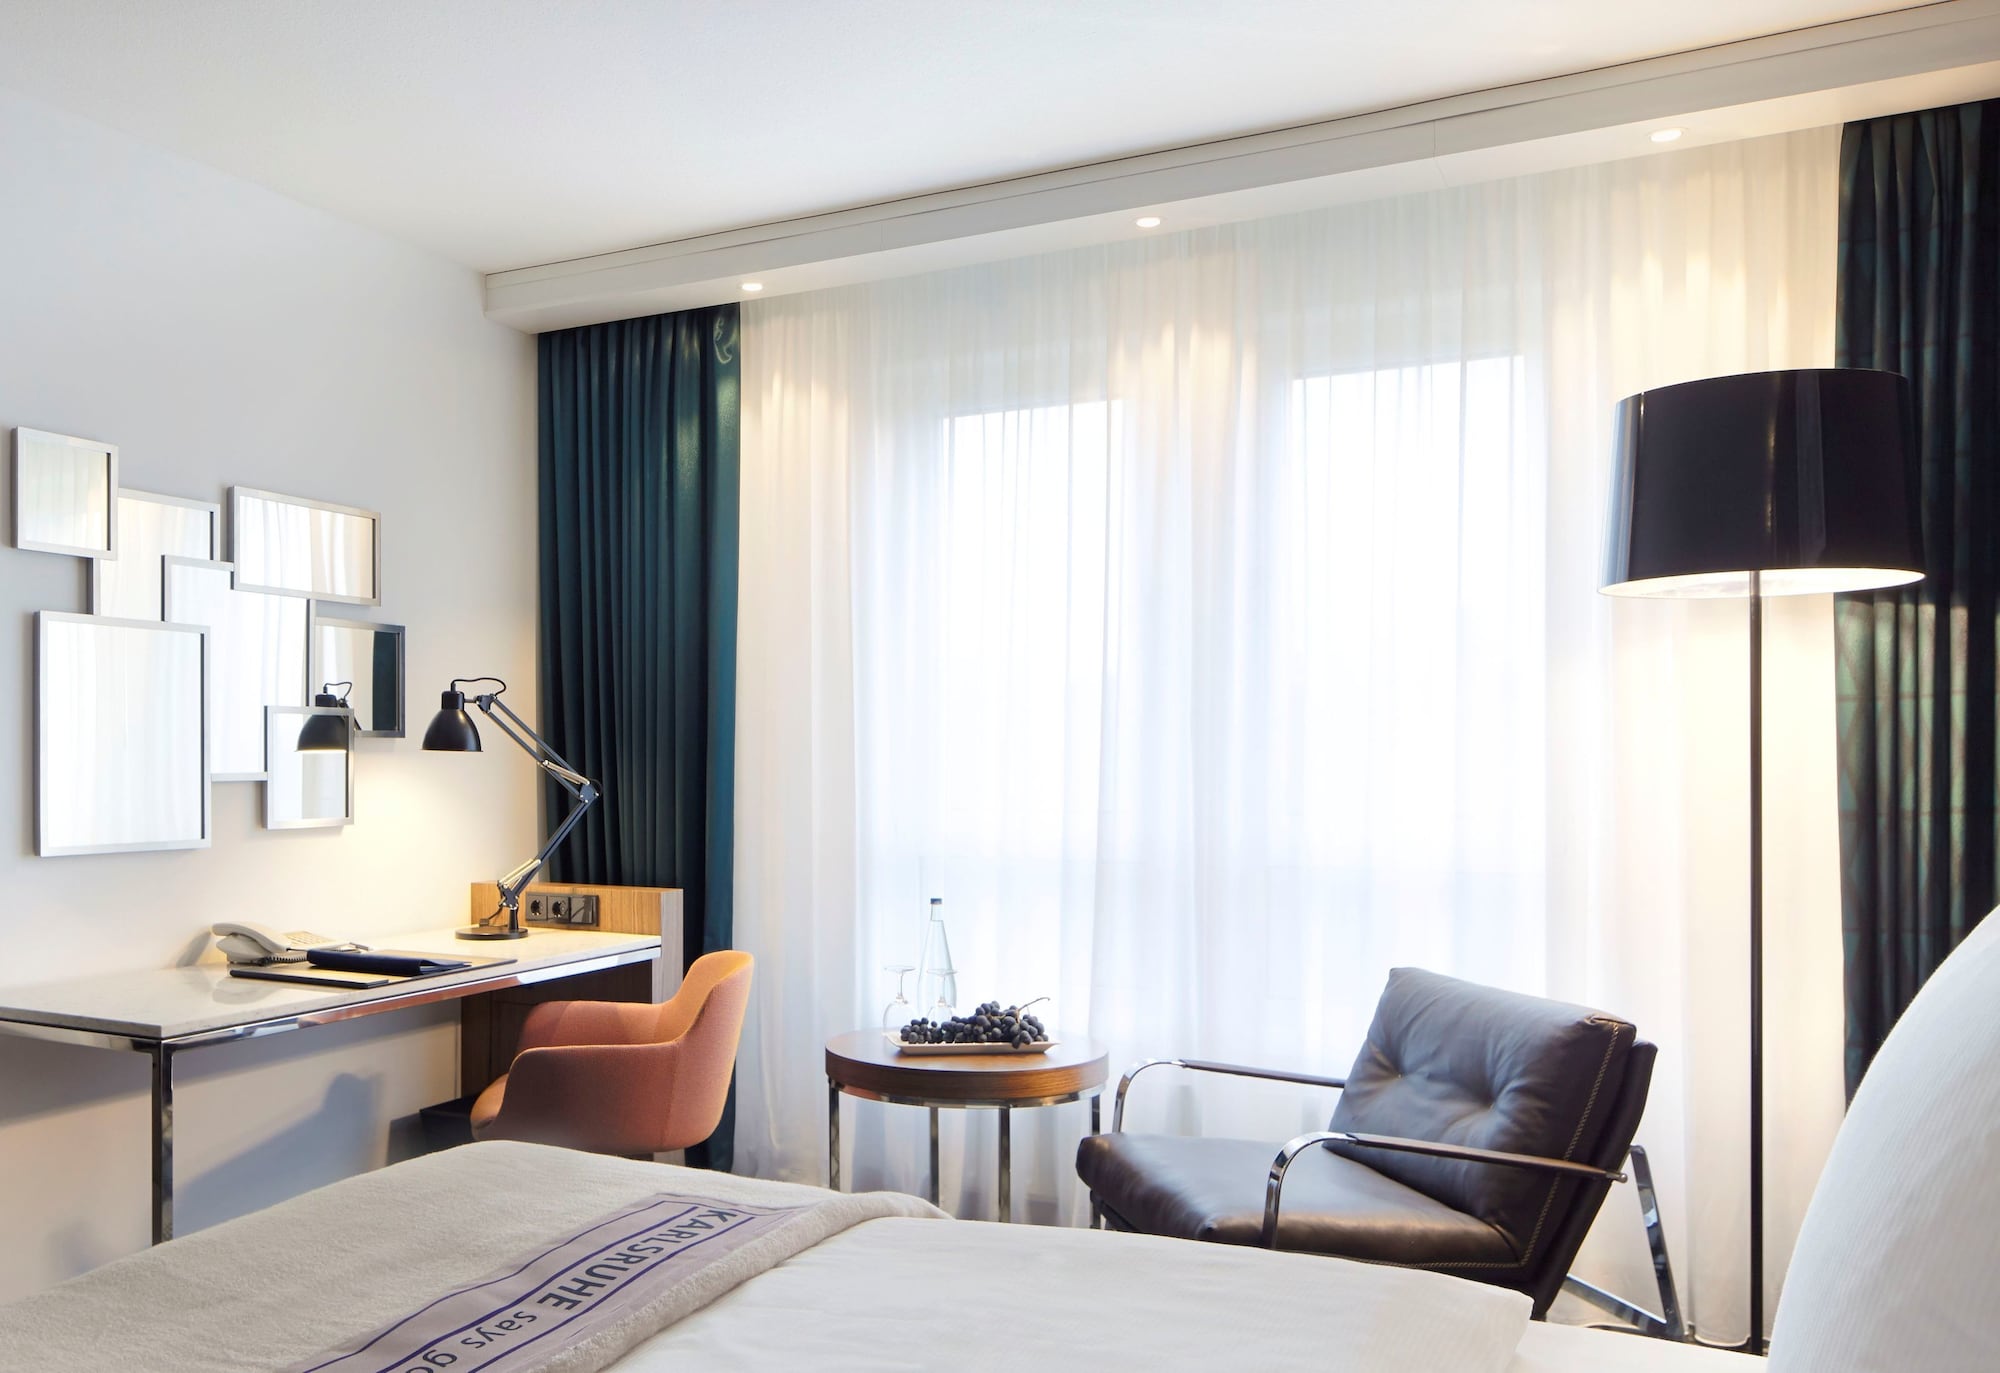 Radisson Blu Hotel, Karlsruhe <br/>117.78 ew <br/> <a href='http://vakantieoplossing.nl/outpage/?id=f0ceb30b54980558855988744eaba341' target='_blank'>View Details</a>